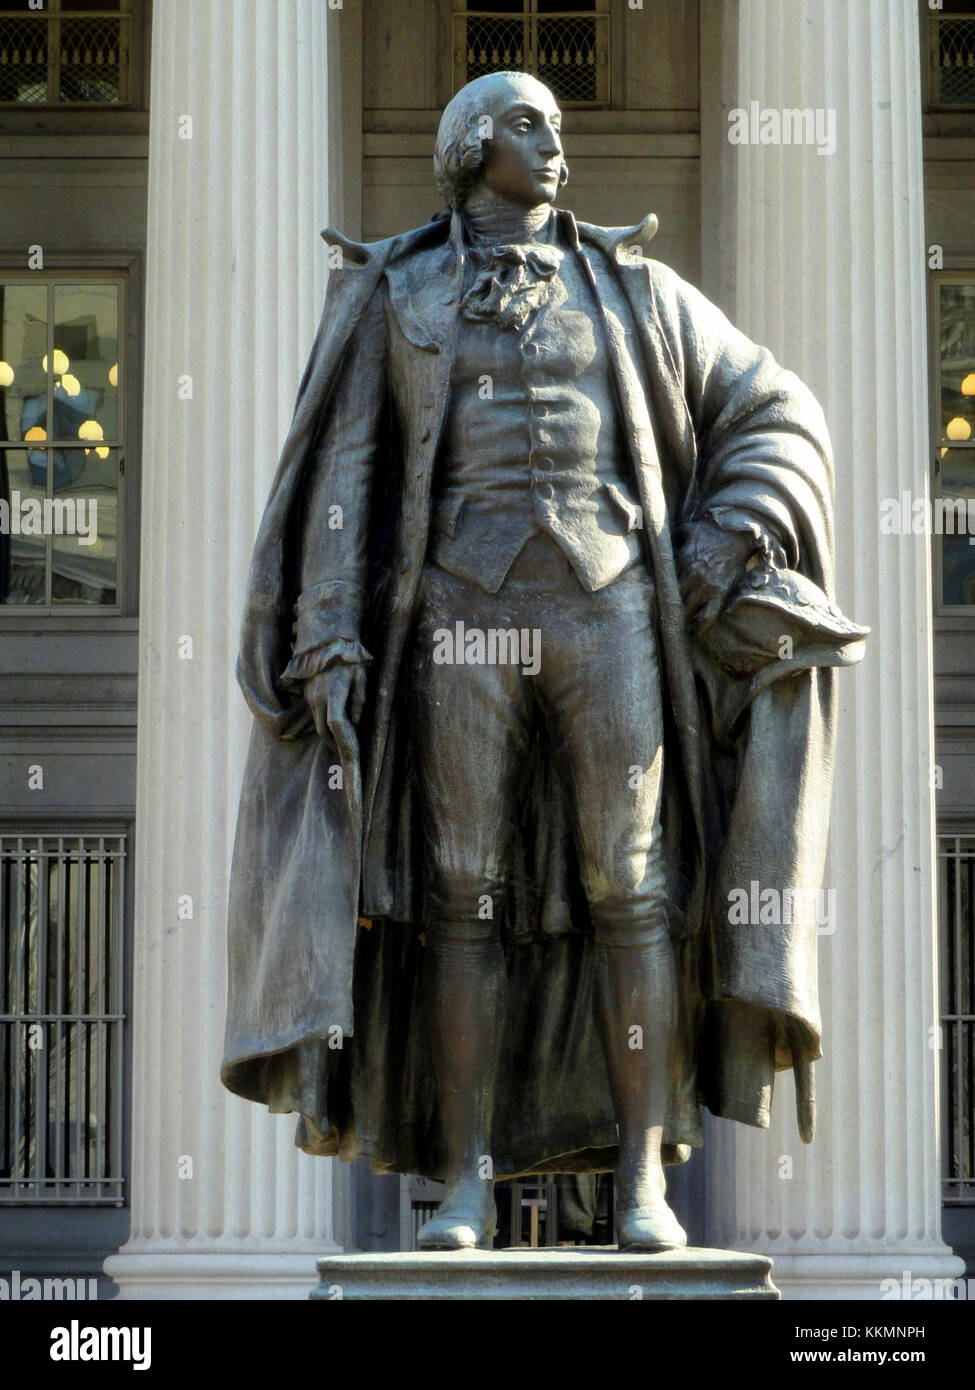 Statue d'Albert Gallatin (Washington, D.C.) - DSC08424 Banque D'Images